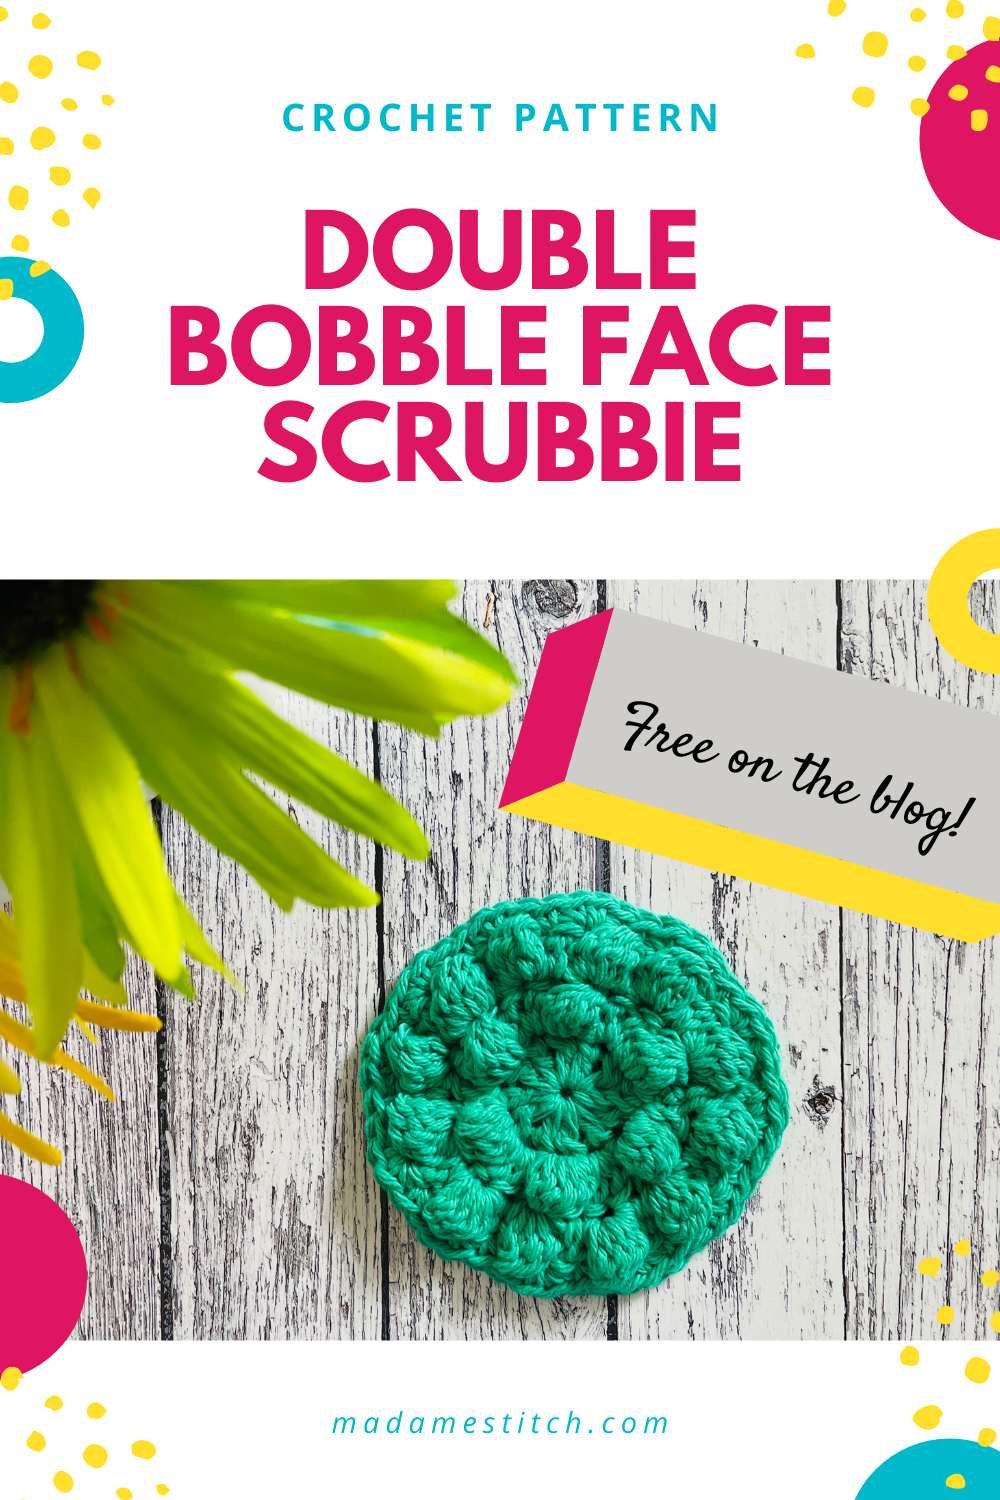 Double bobble stitch face scrubbie crochet pattern by MadameStitch